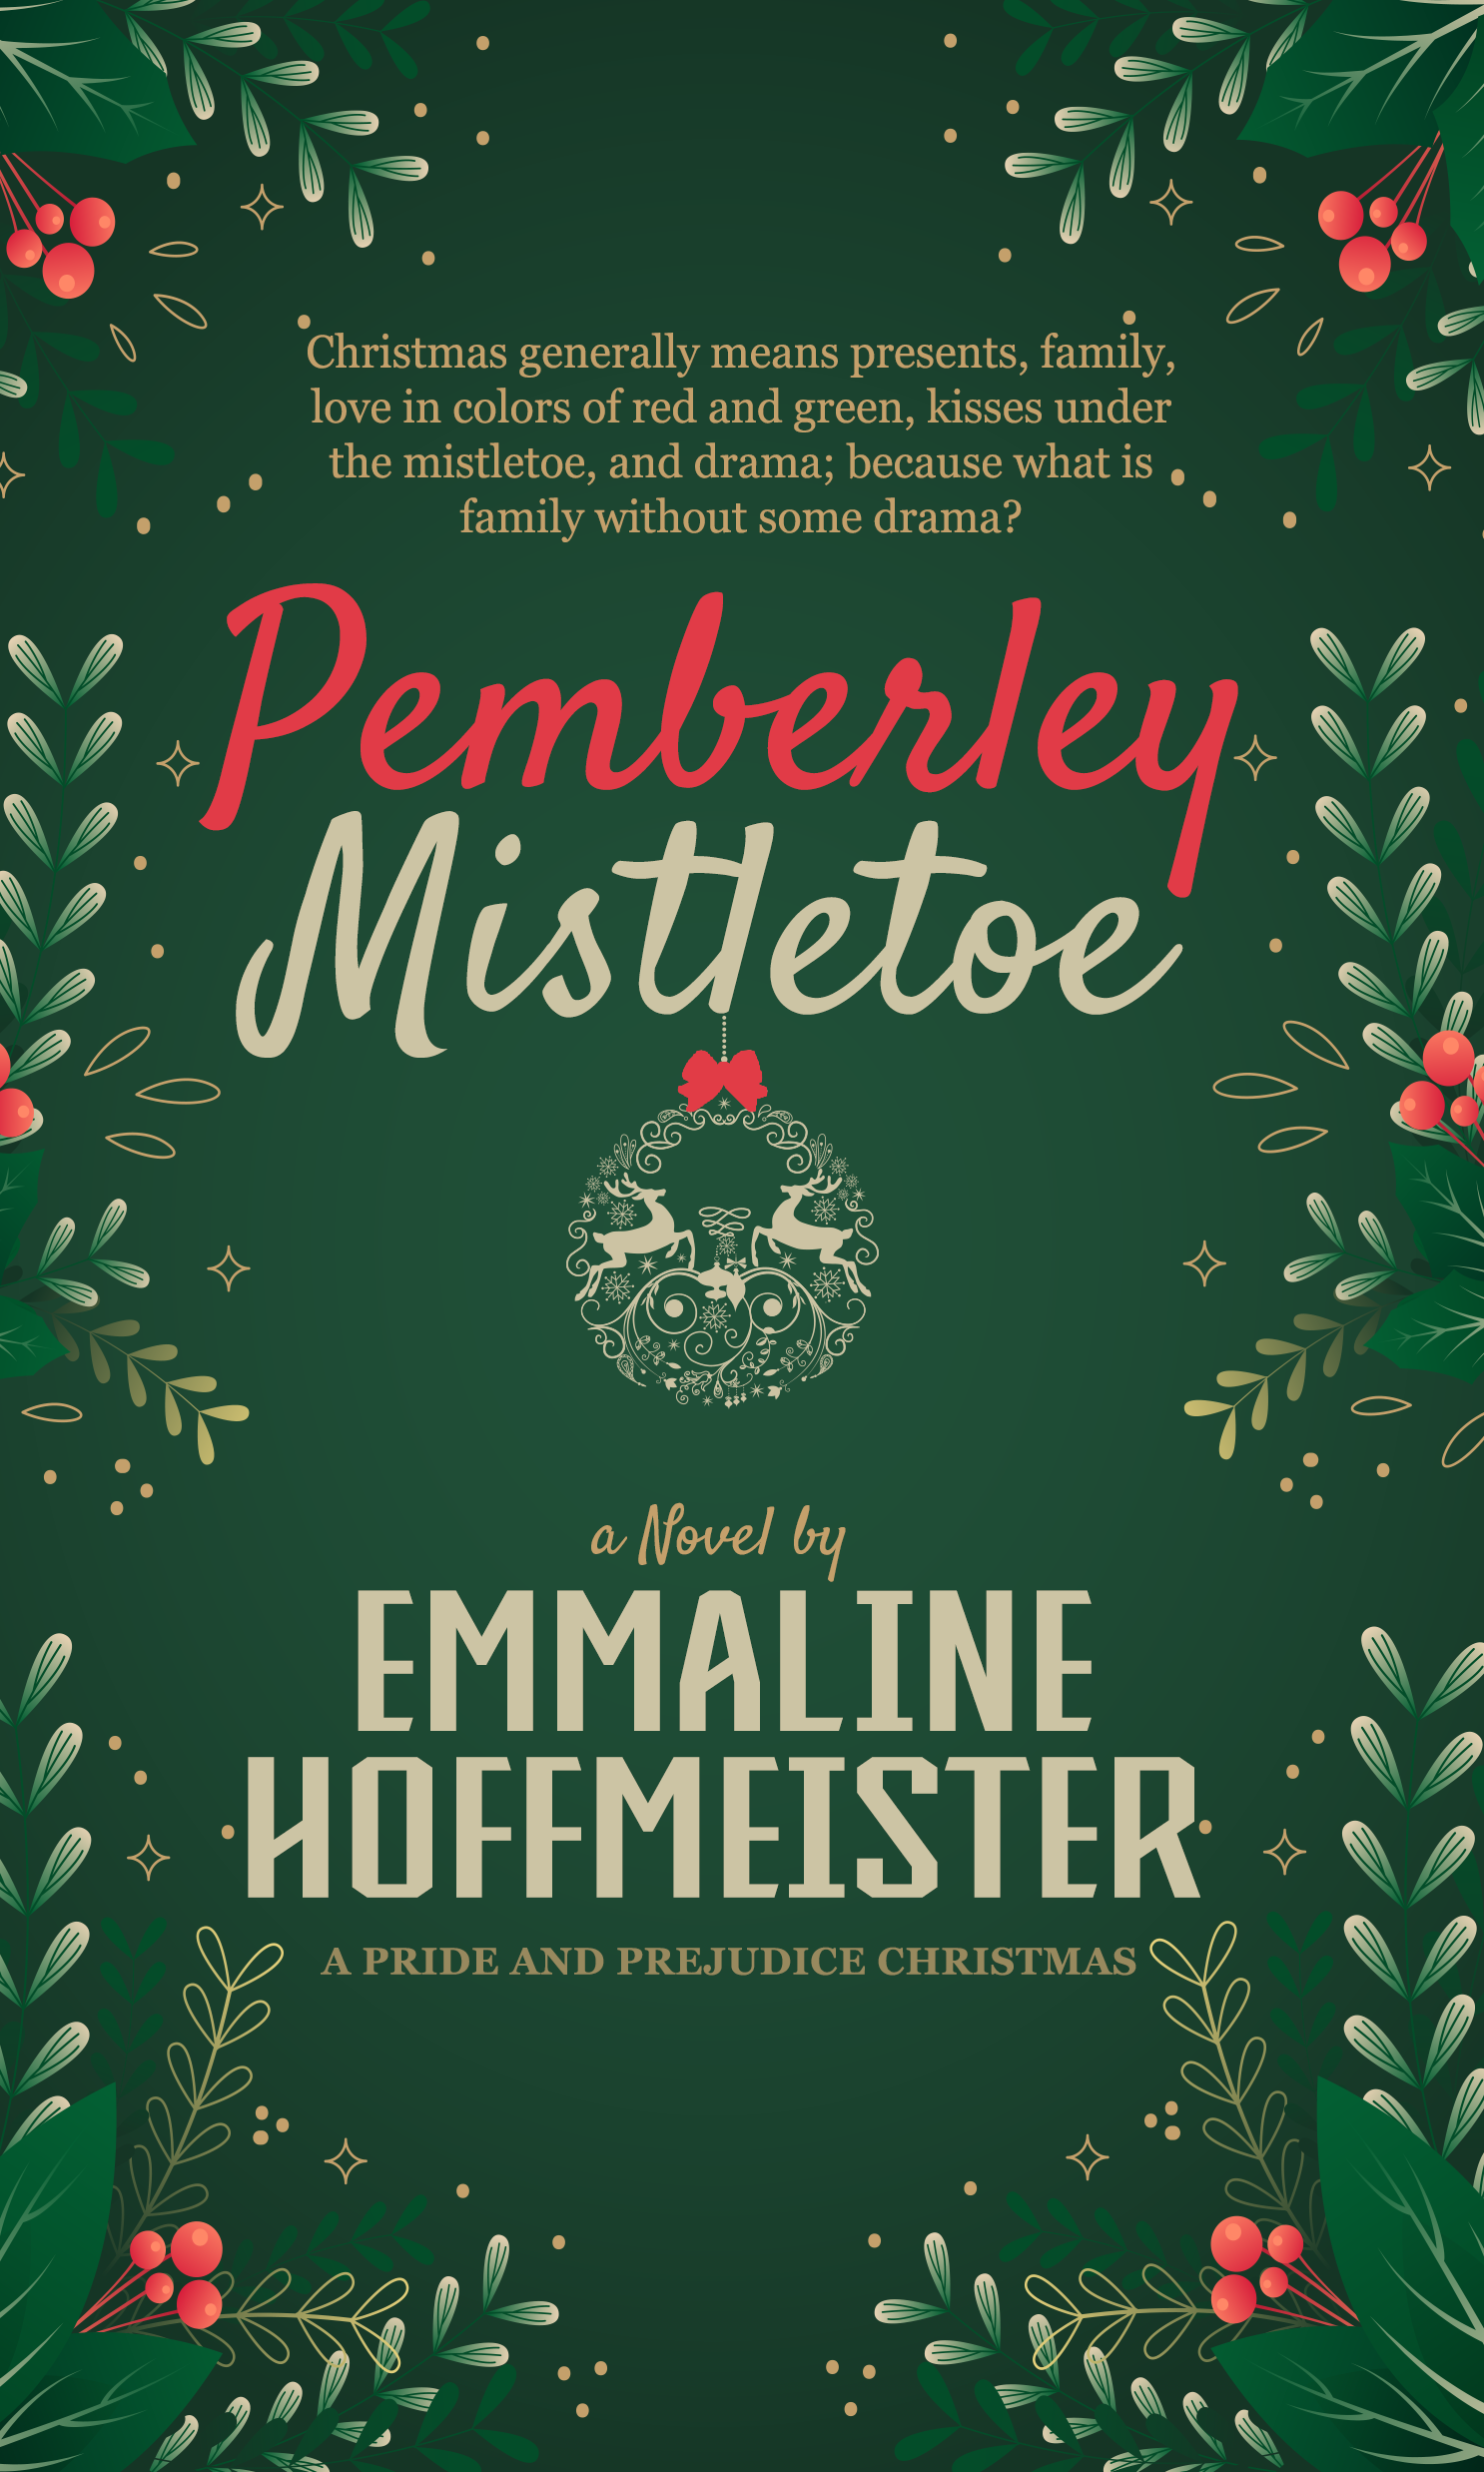 Pemberley Mistletoe, A Pride and Prejudice Christmas by Emmaline Hoffmeister Book Cover